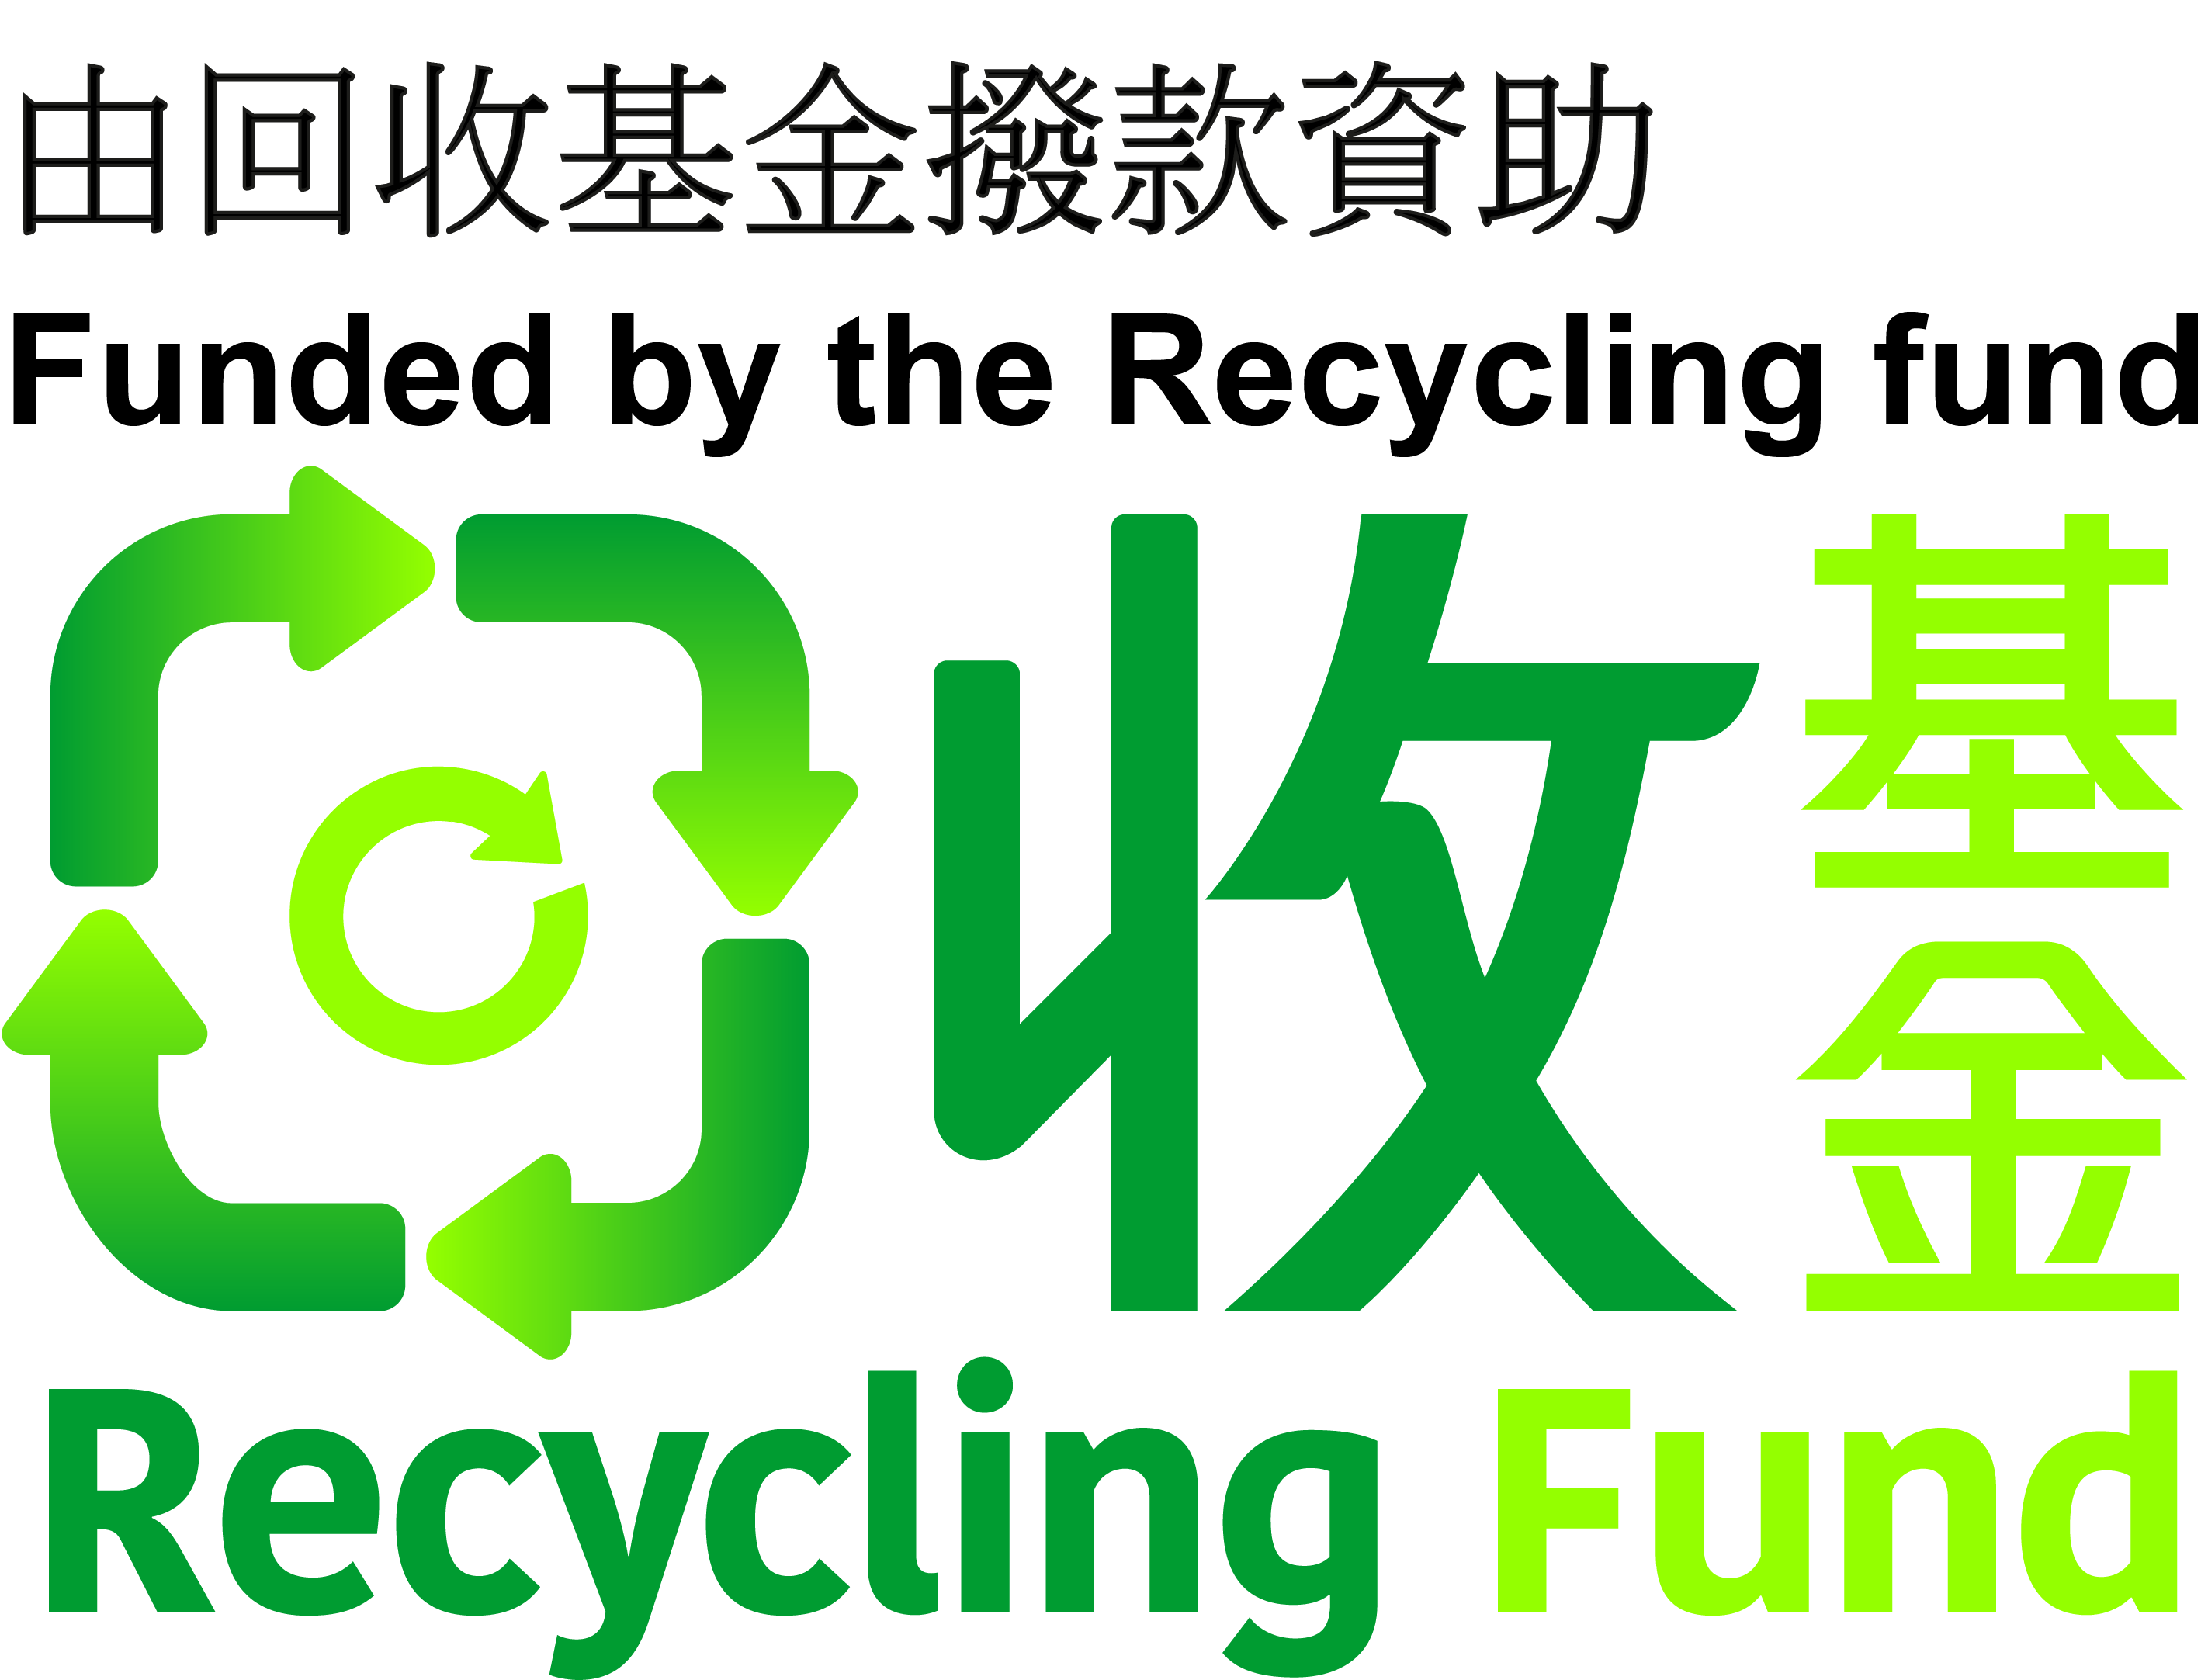 Recycling Fund Logo